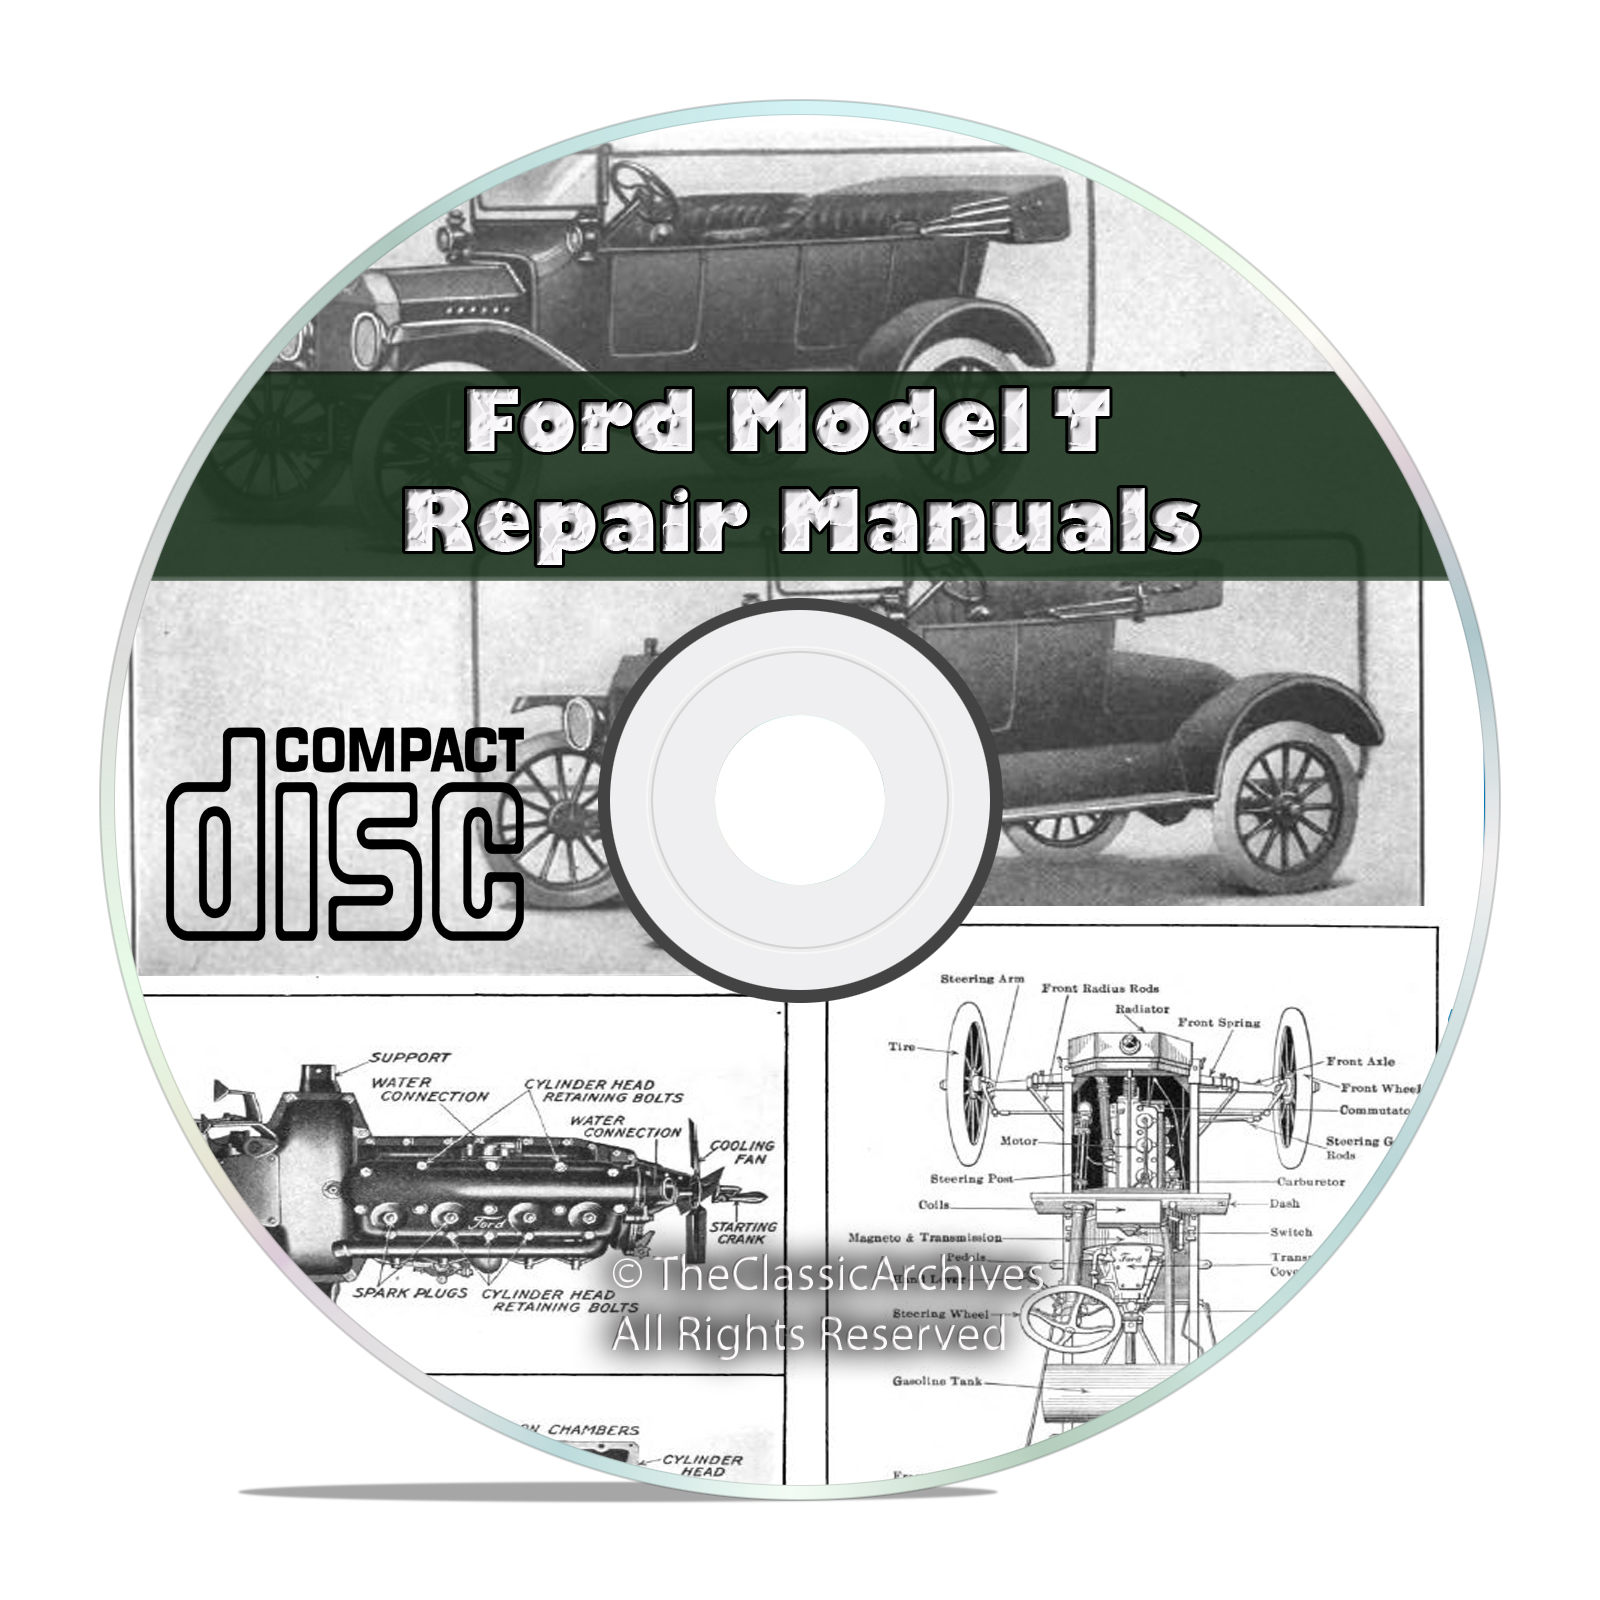 Classic Ford Model T Car Repair, Construction, Operation Manuals Books CD